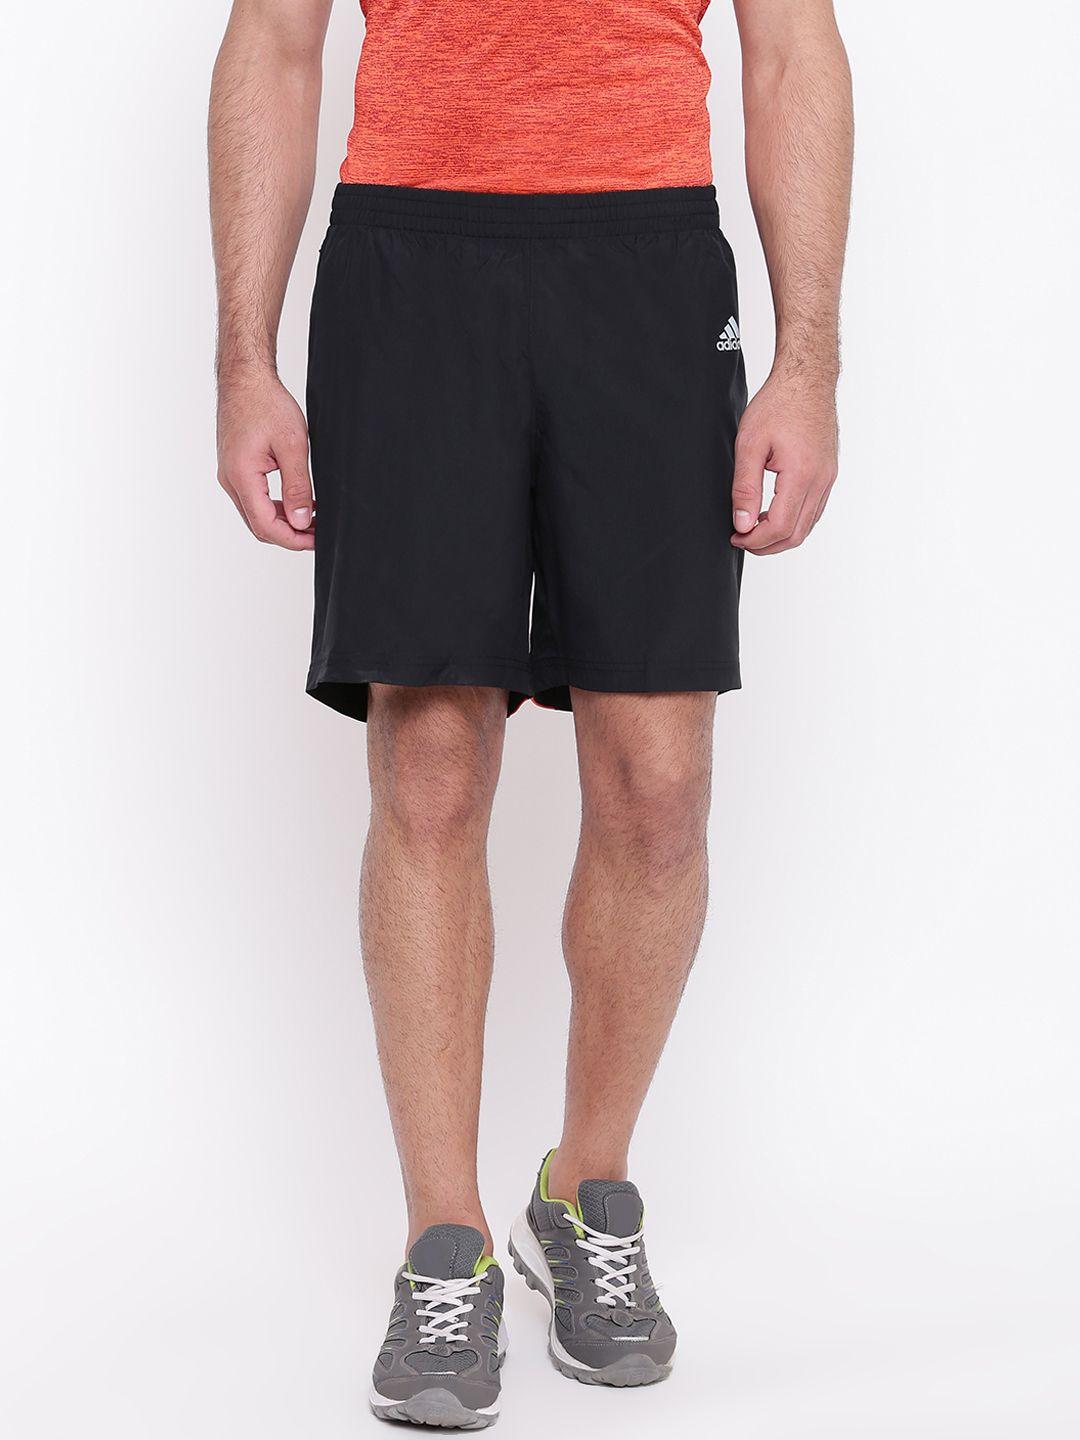 adidas men black & orange colourblocked own the run running shorts